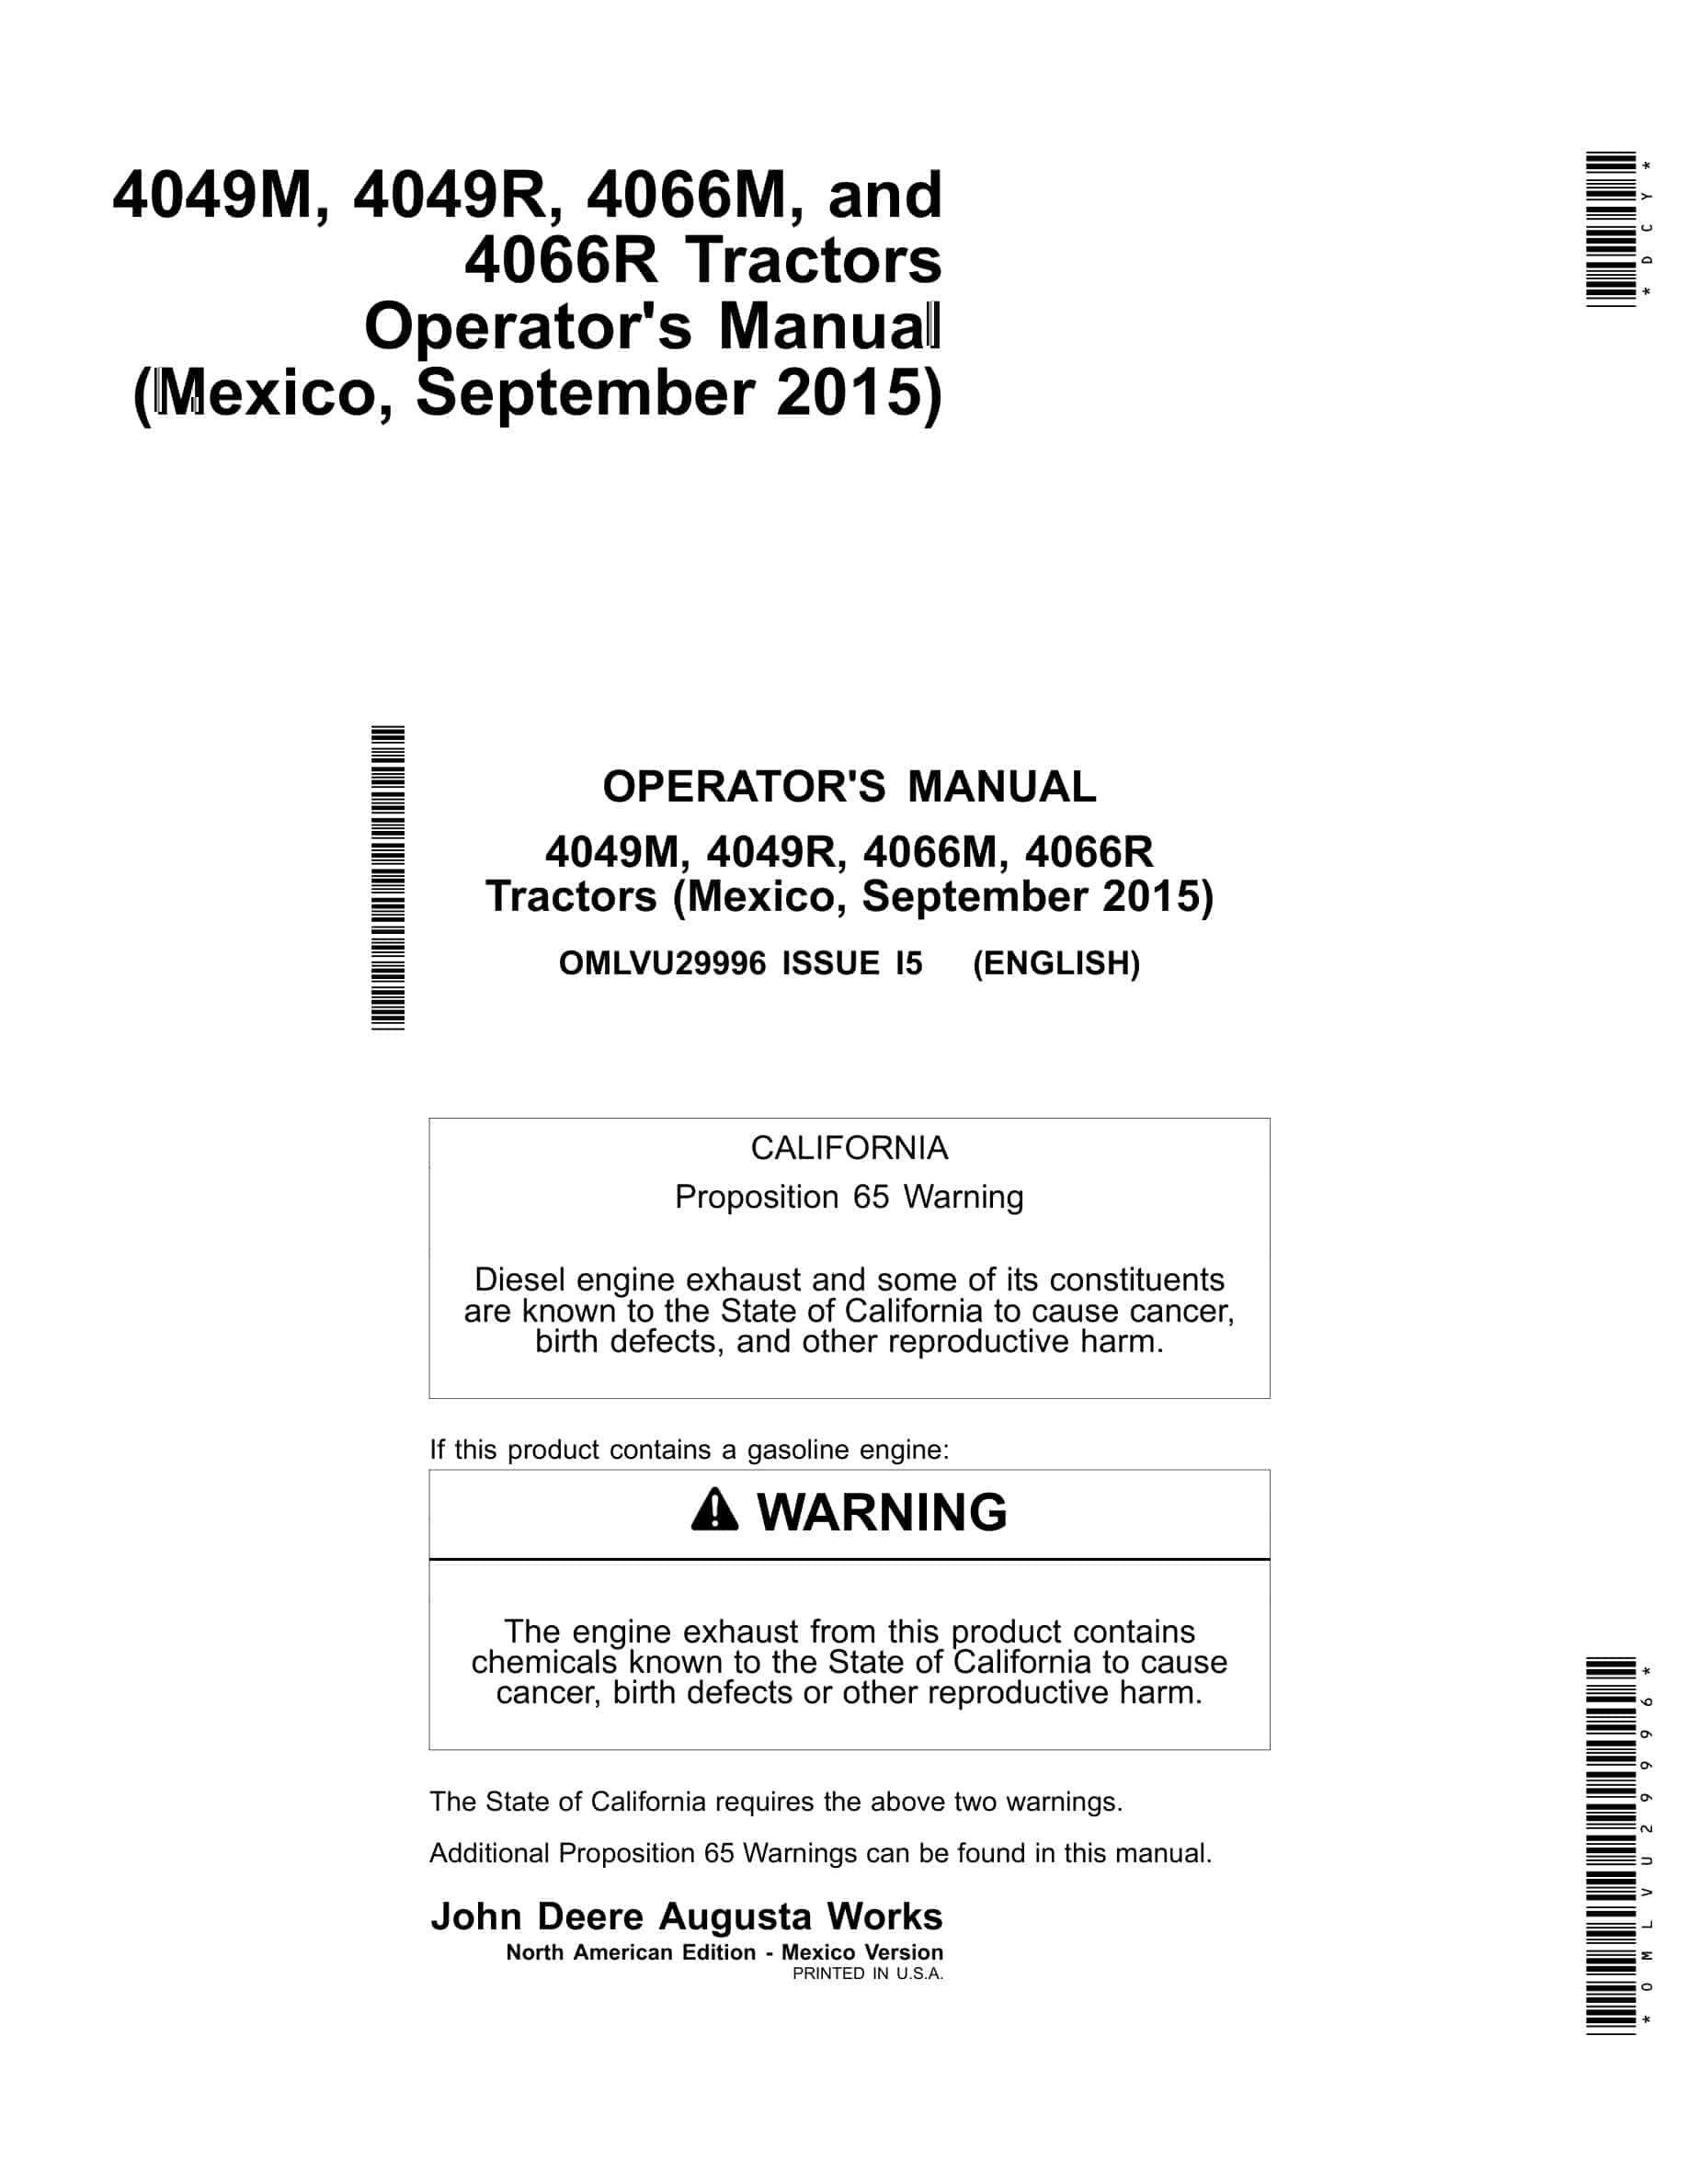 John Deere 4049M, 4049R, 4066M, 4066R Tractor Operator Manual OMLVU29996-1